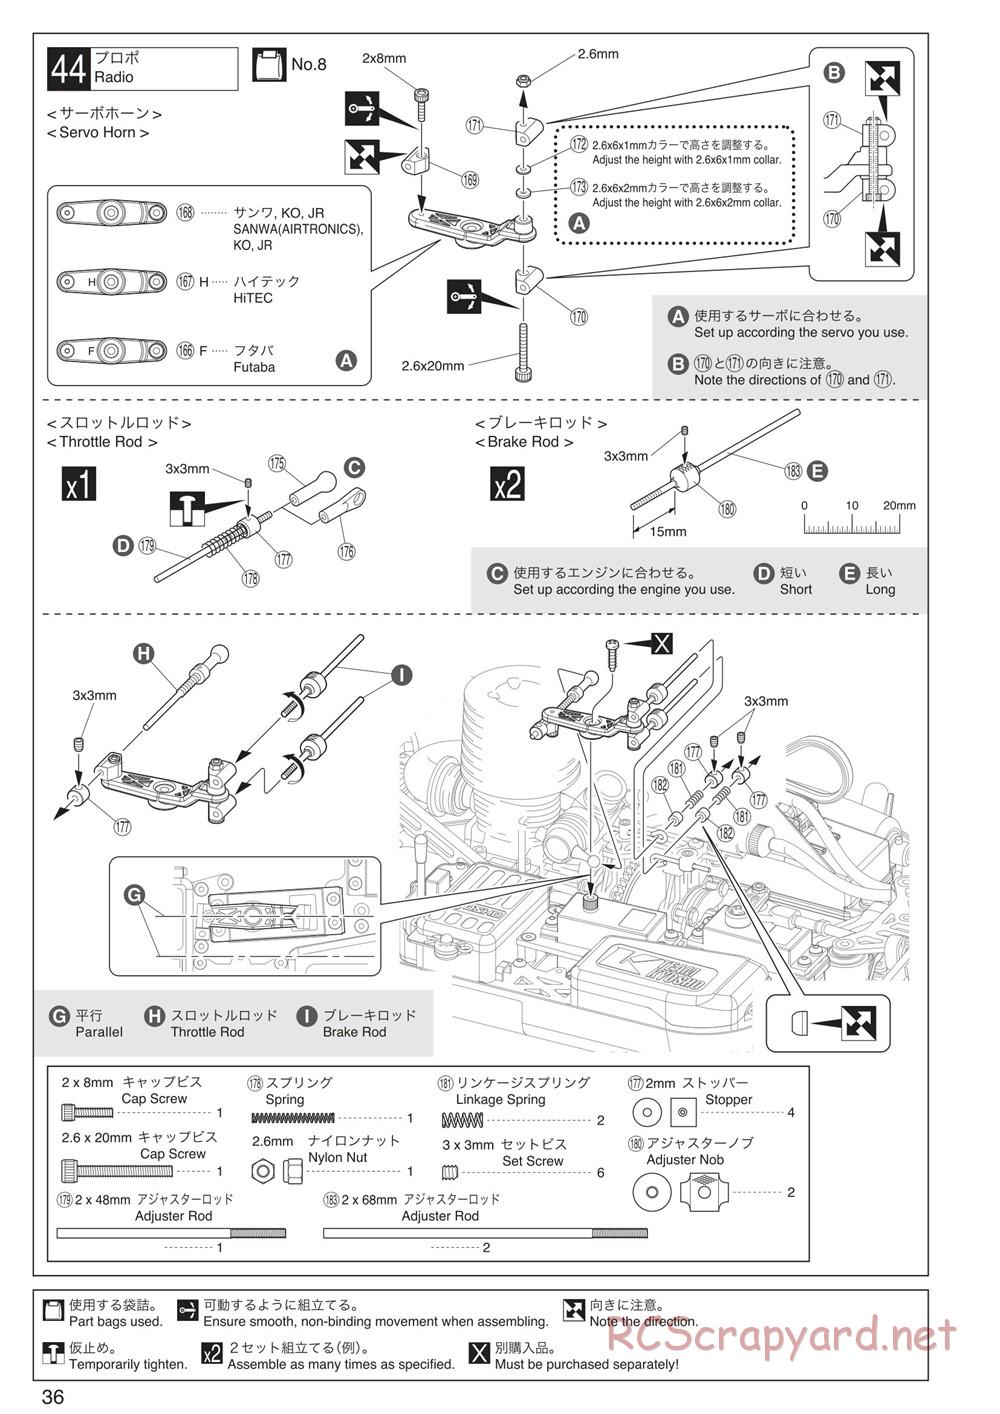 Kyosho - Inferno MP9 TKI3 - Manual - Page 36